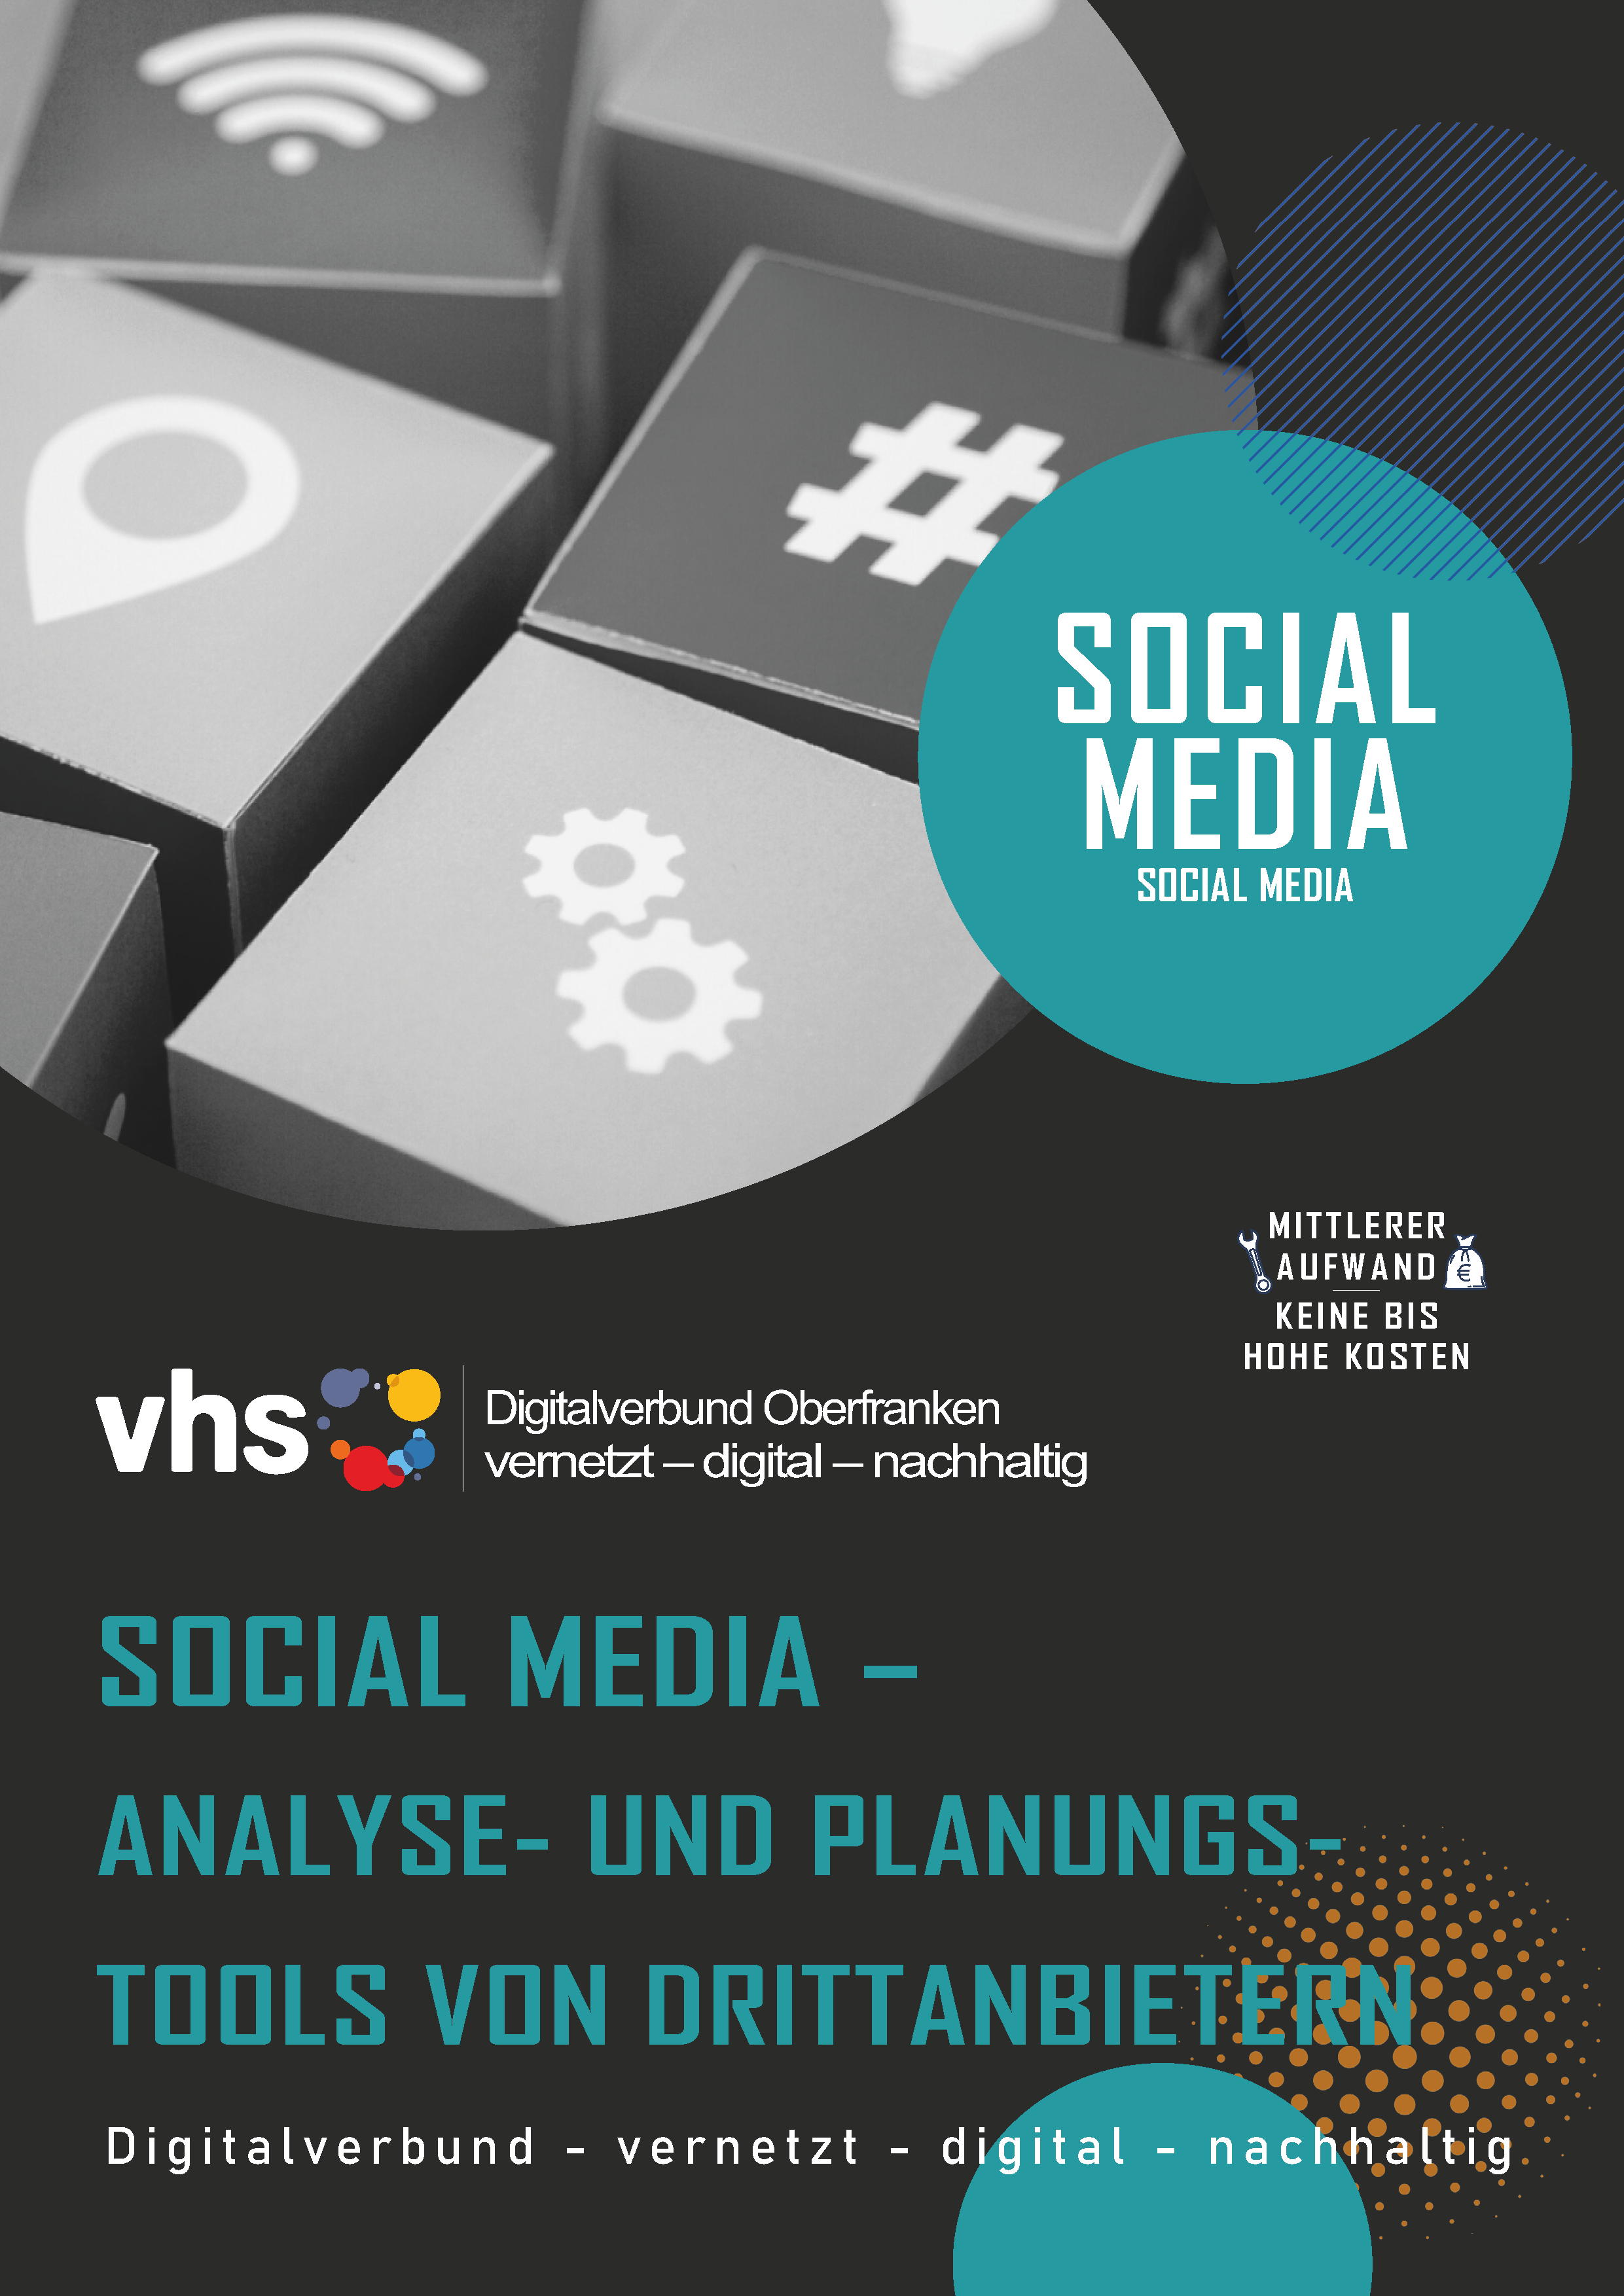 Deckblatt Marketing-Digithek: Social Media: Analyse-, Planungstools von Drittanbietern